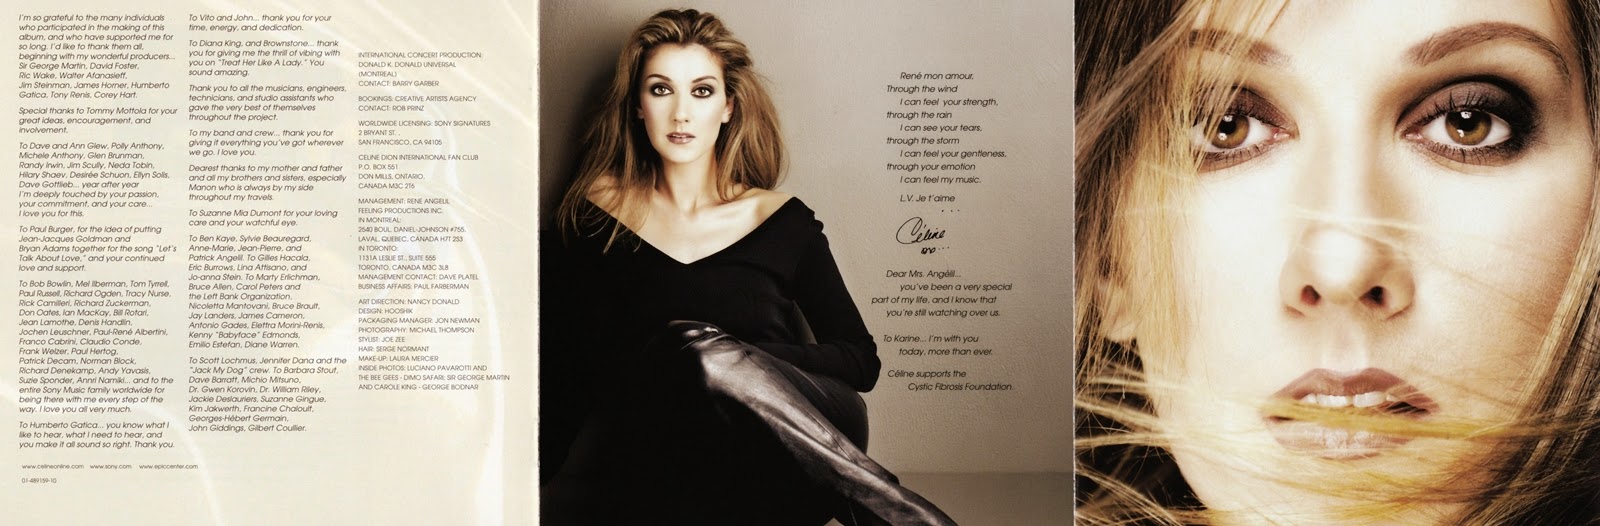 Celine Dion Lets Talk About Love 1997 FLAC